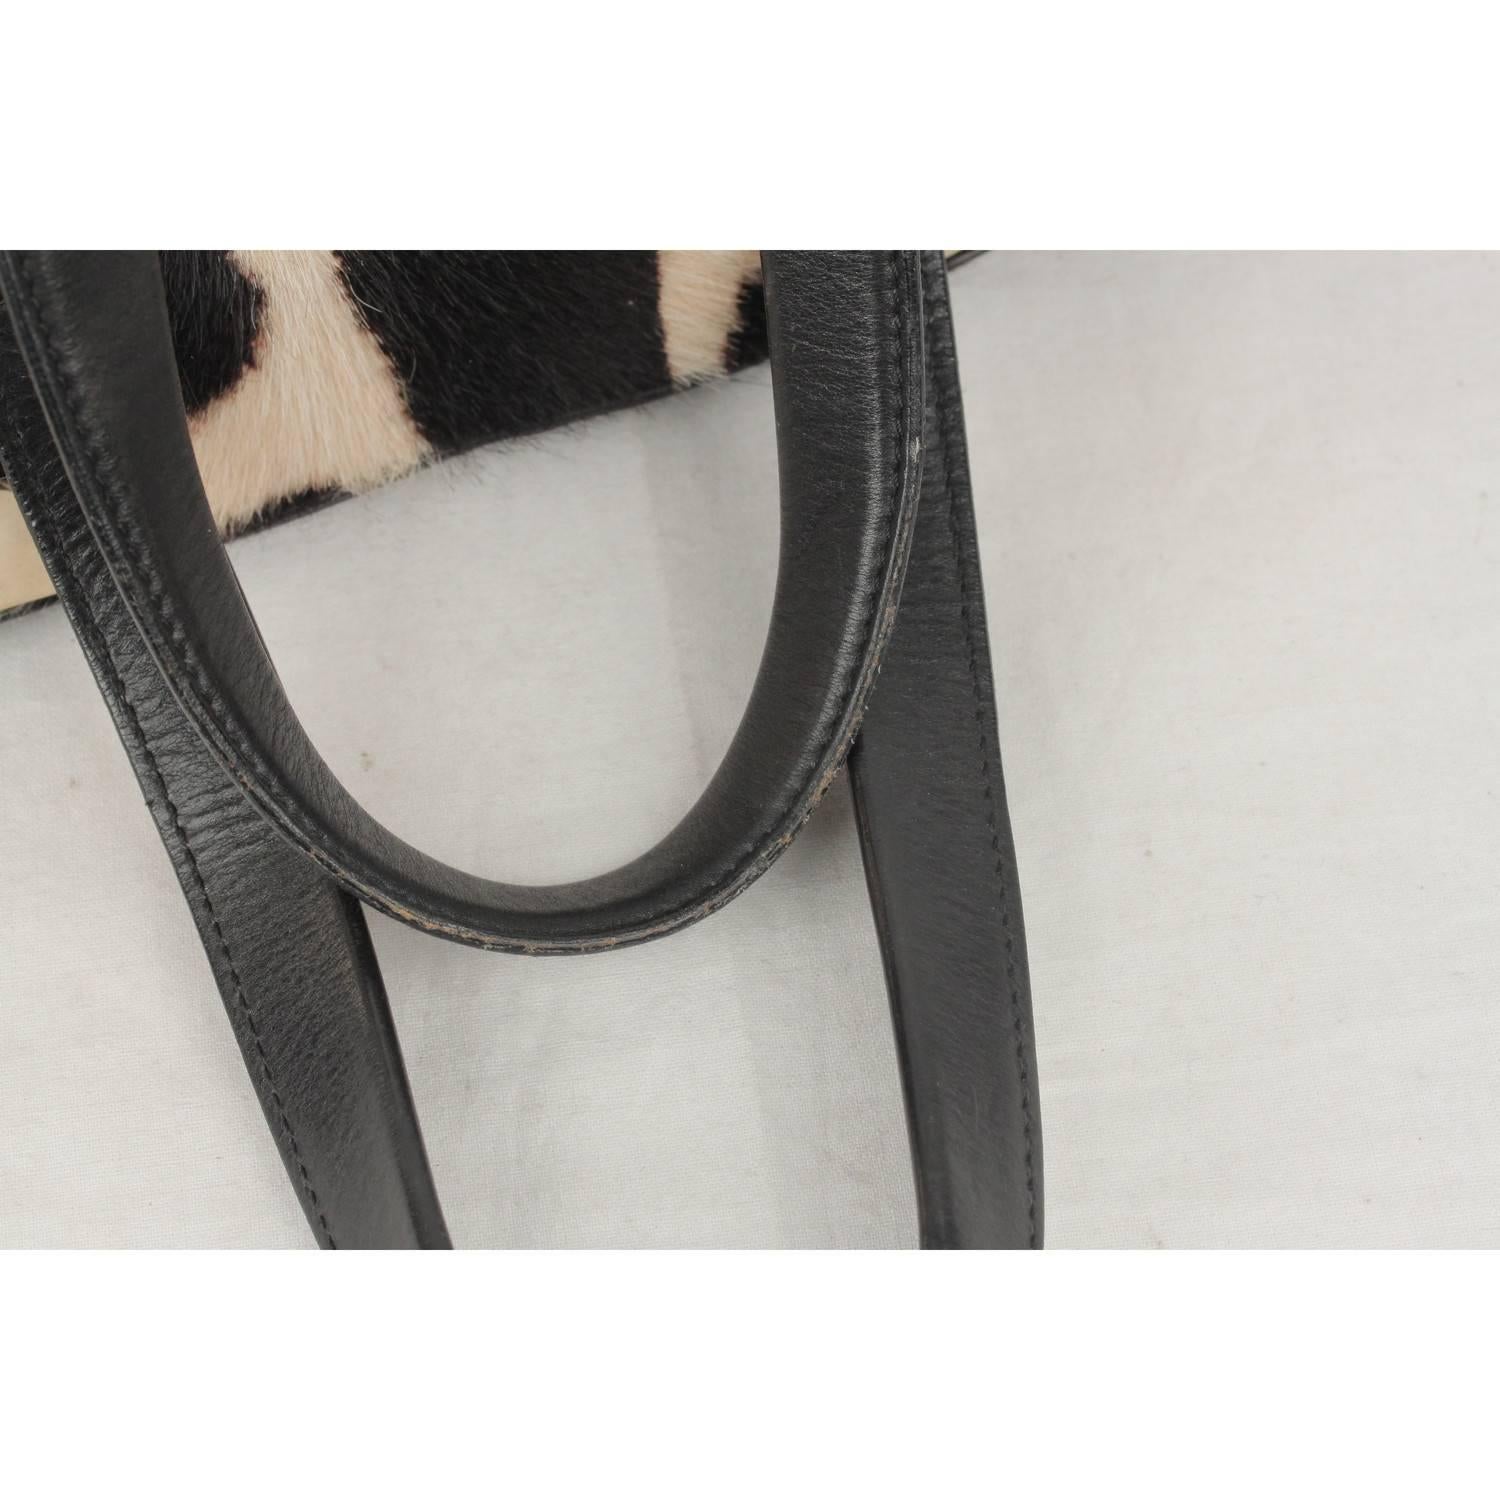 YVES SAINT LAURENT Pony Hair Leather HANDBAG Shoulder Bag 4